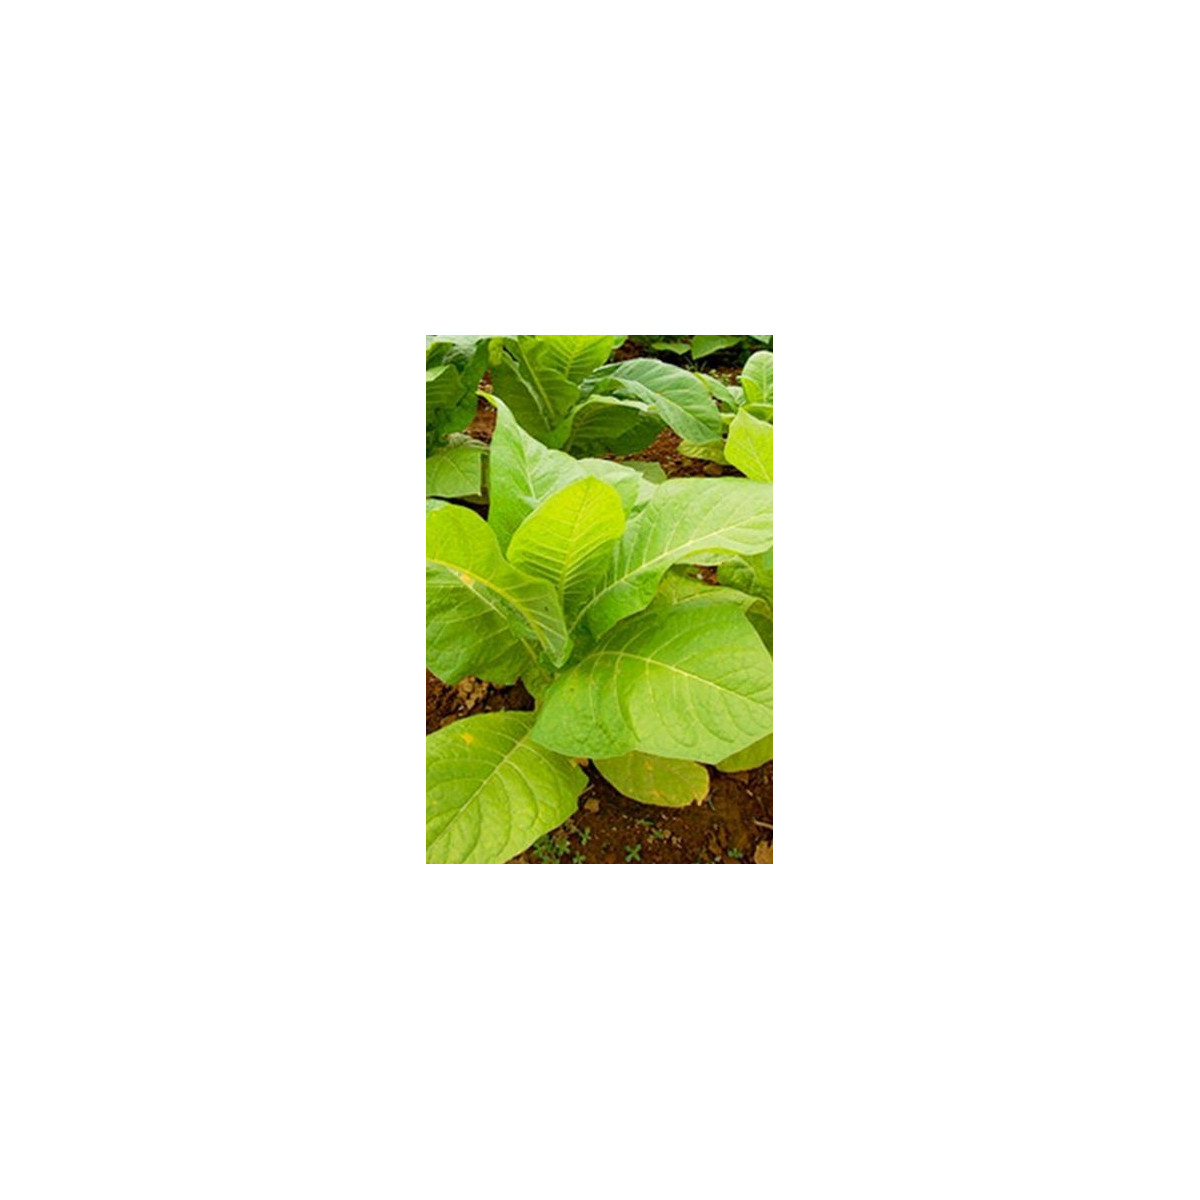 Tabák Burley - rostlina Nicotiana tabacum - semena tabáku - 20 ks